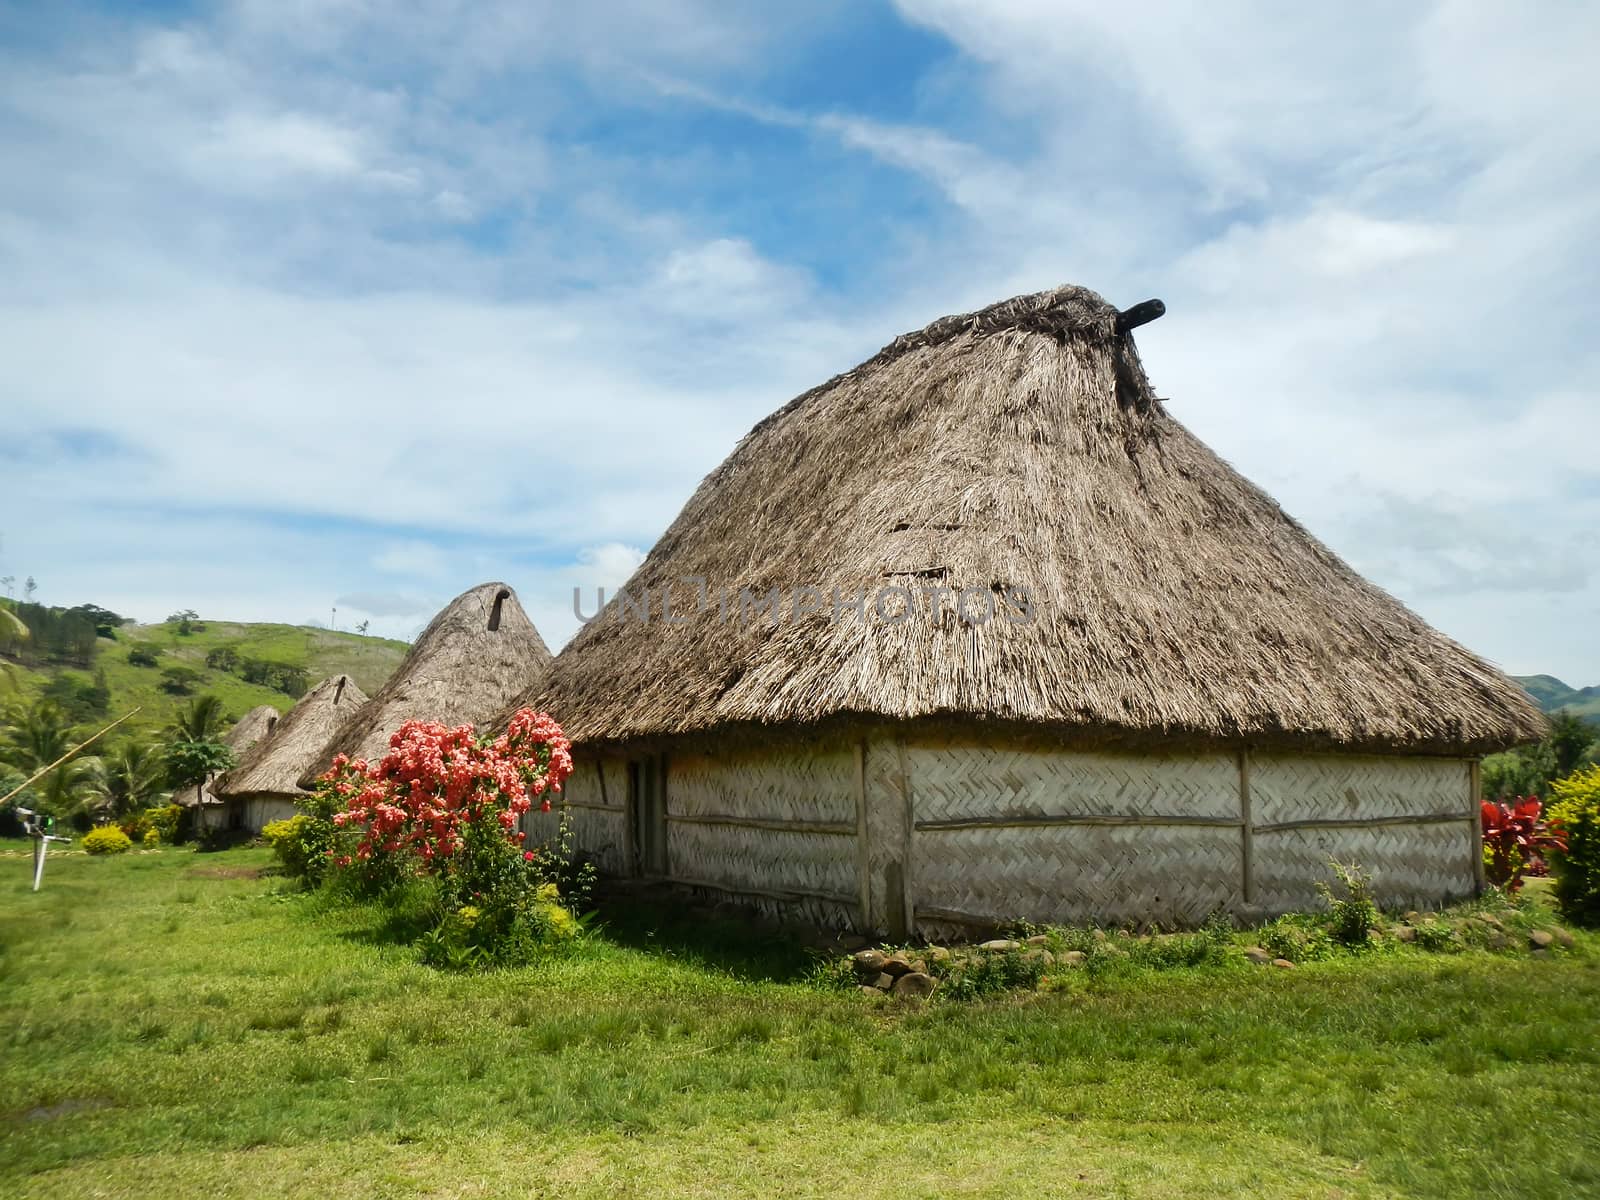 Traditional houses of Navala village, Viti Levu island, Fiji